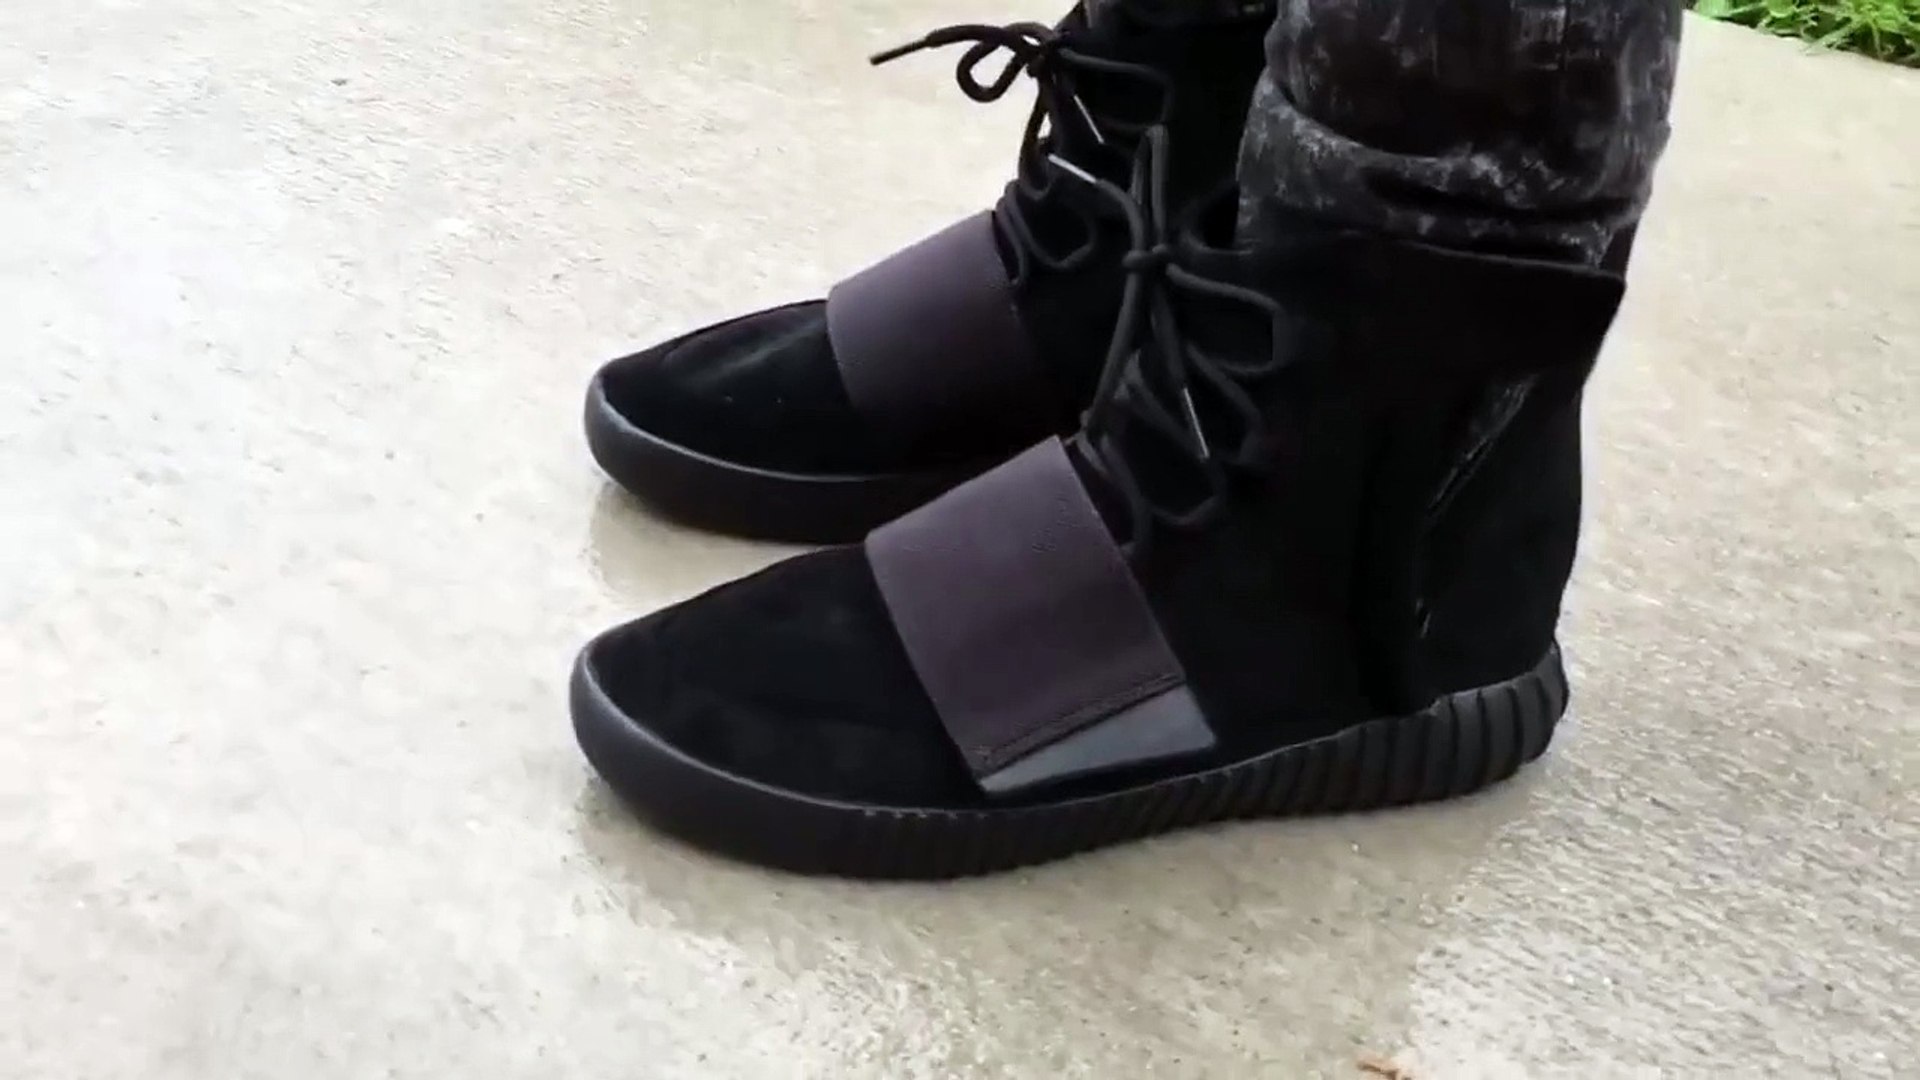 Adidas Yeezy 750 Boost Black - On Feet - video Dailymotion